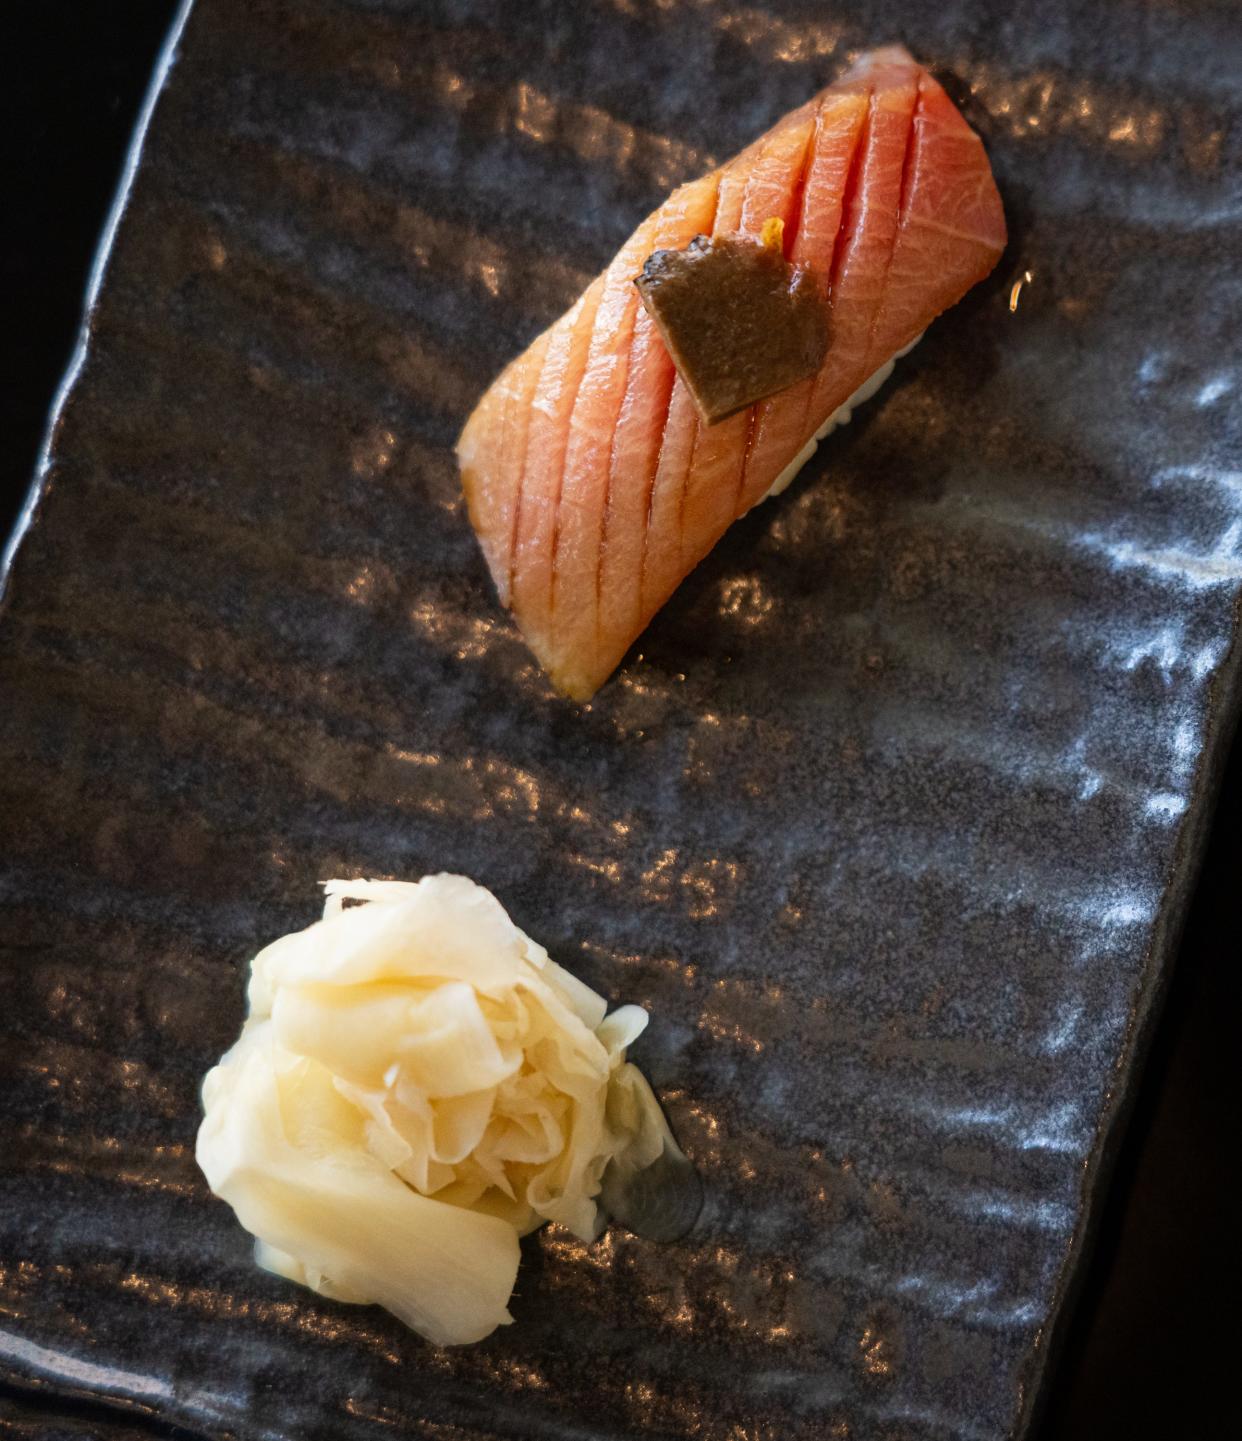 The sushi at Craft Omakase received minimal adornment.